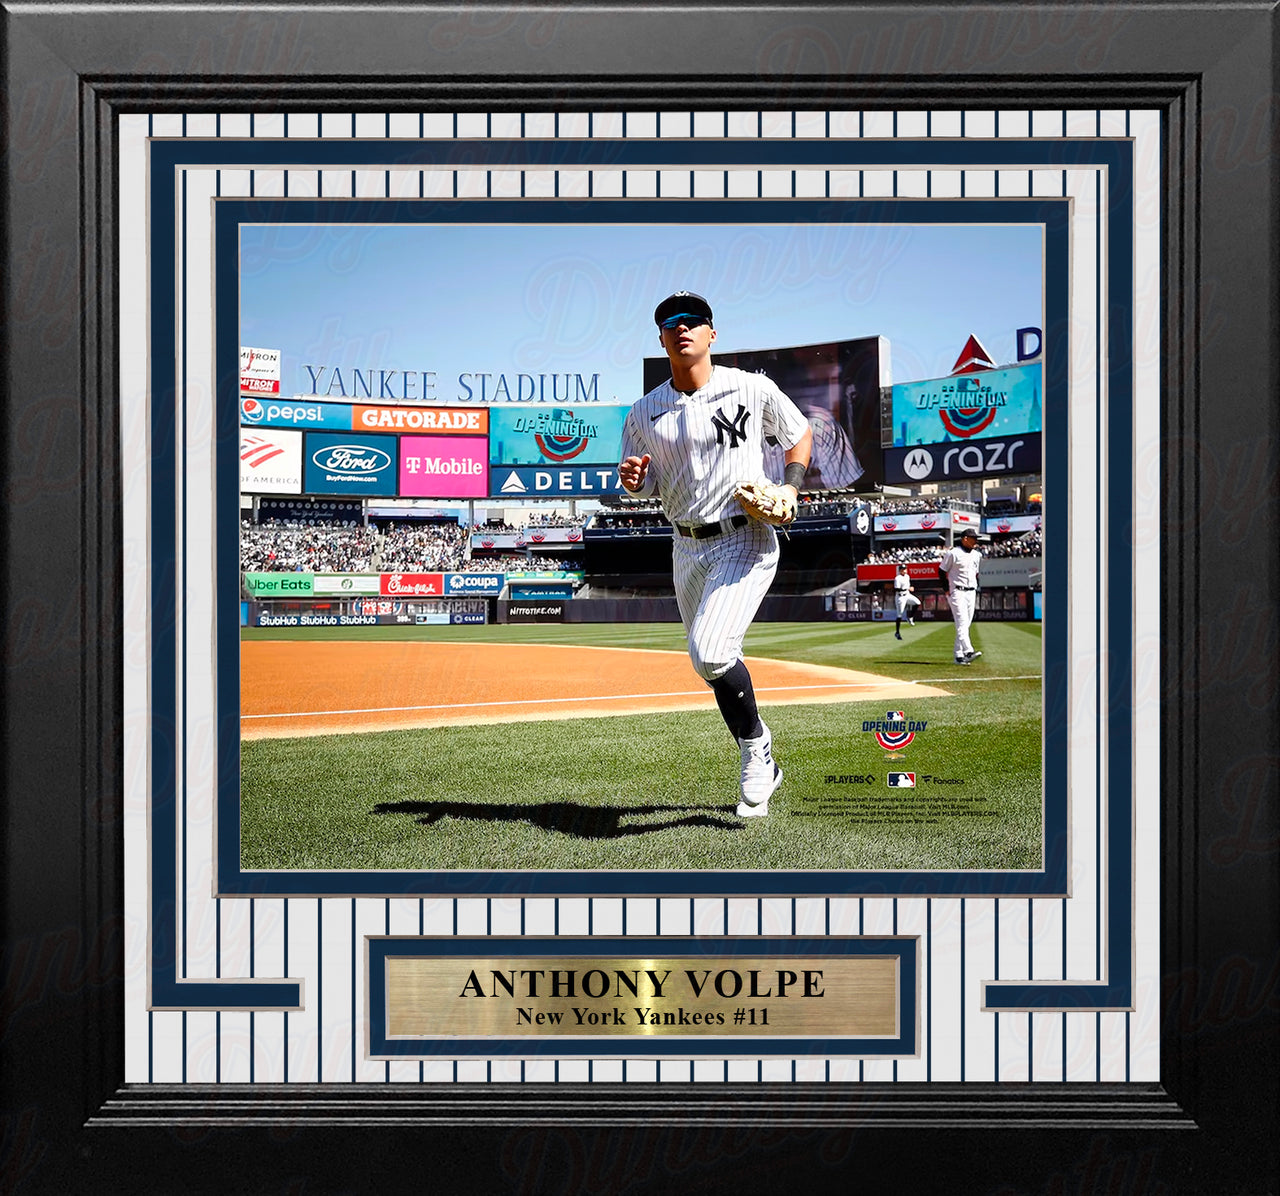 Anthony Volpe Walks Onto the Field New York Yankees 8" x 10" Framed Baseball Photo - Dynasty Sports & Framing 